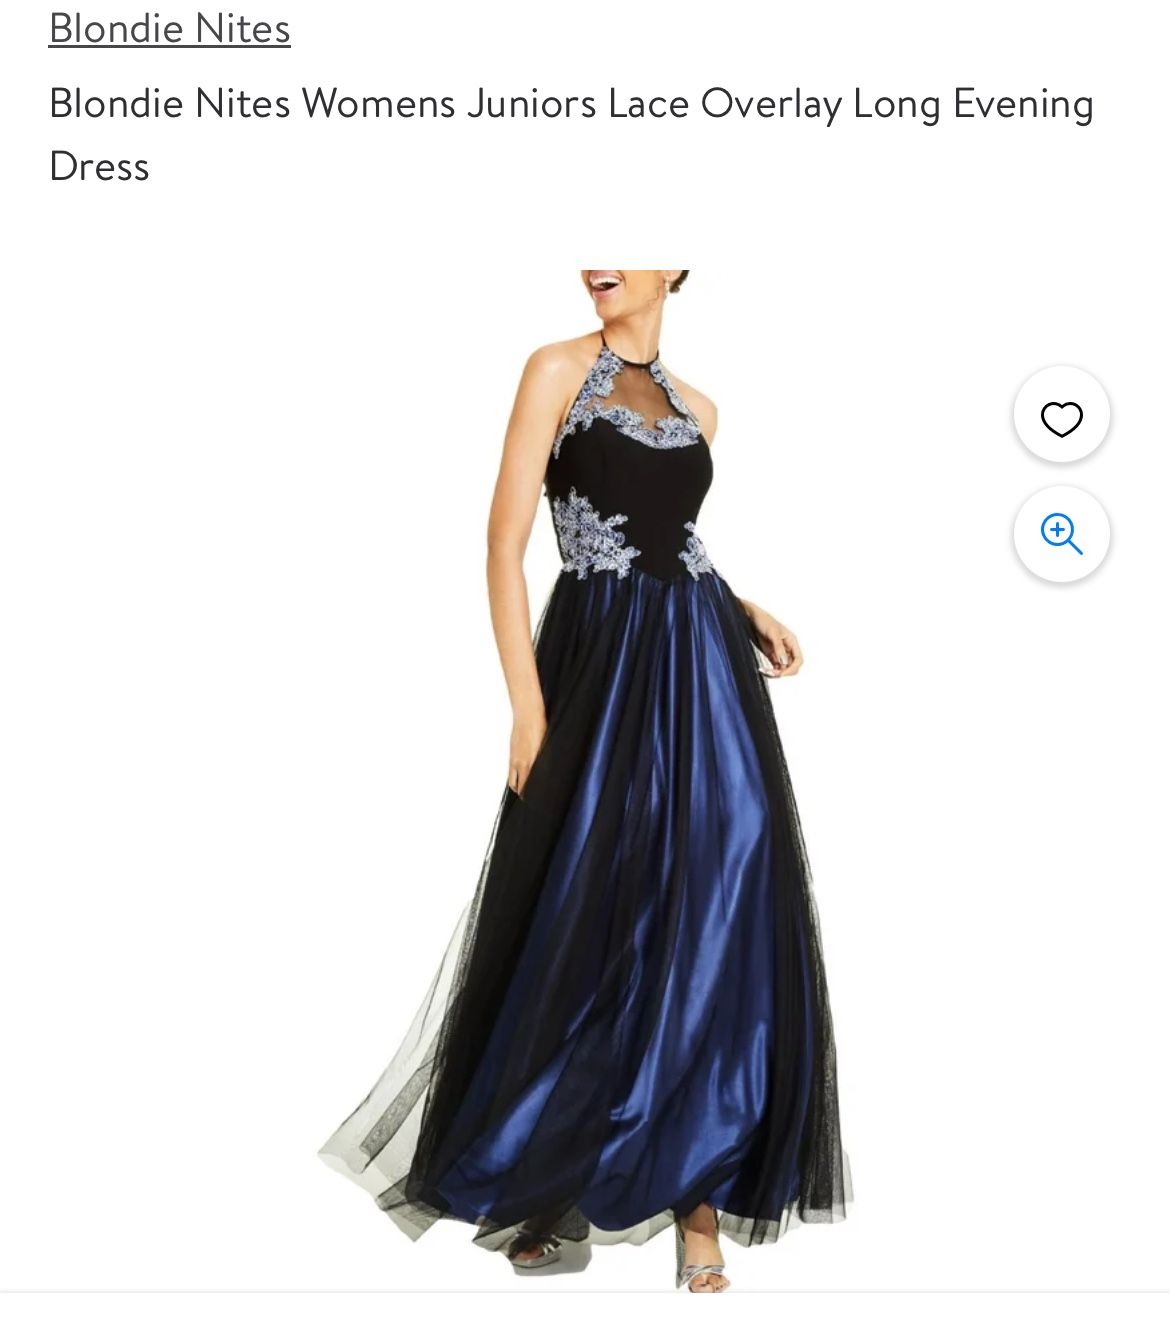 Blondie Nites Womens Juniors Lace Overlay Long Evening Dress × 1